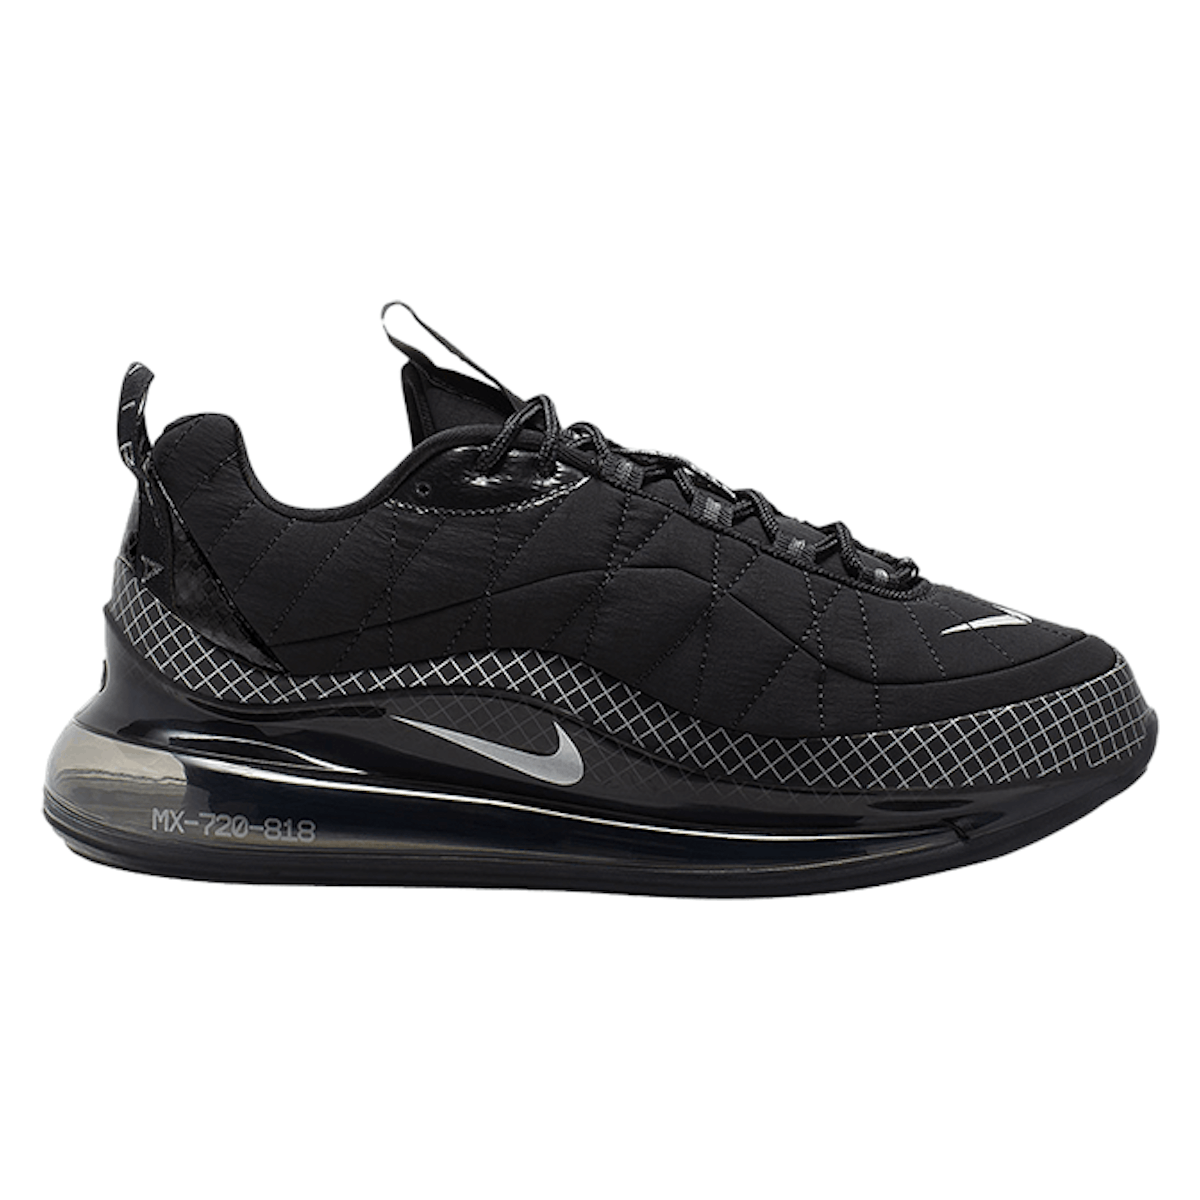 Nike MX-720-818 "Black"